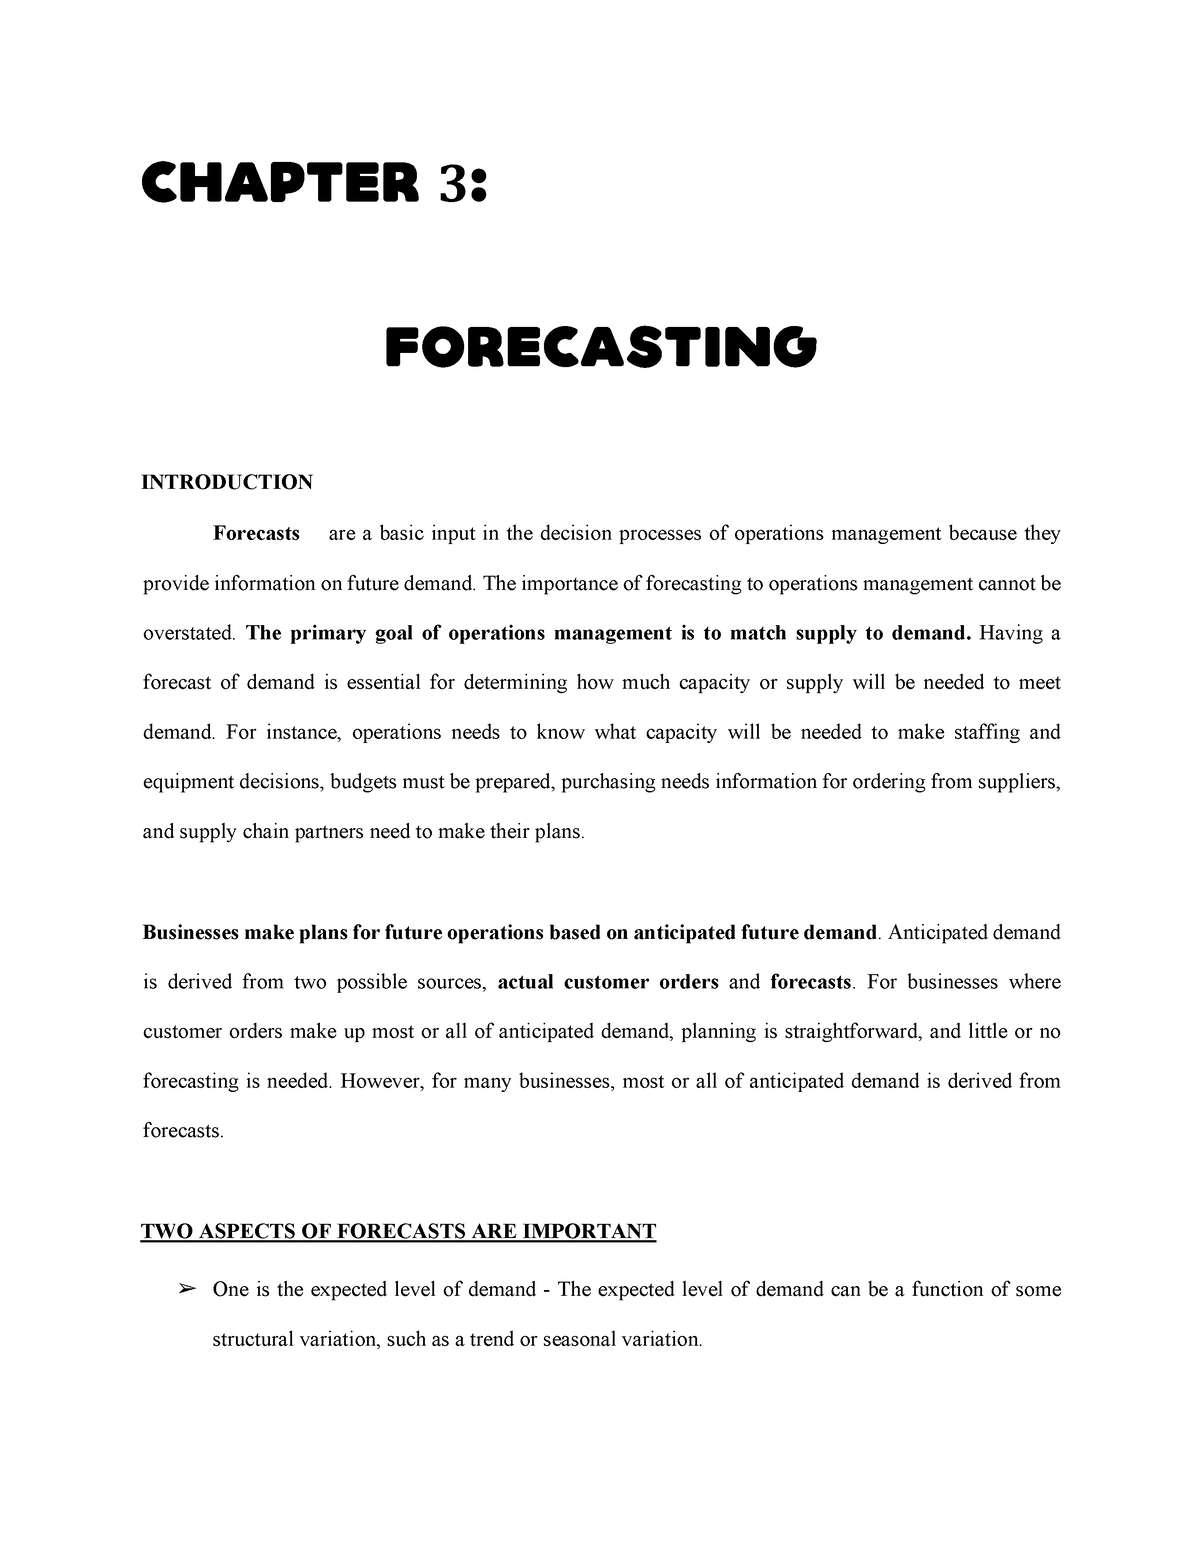 assignment 3 forecasting